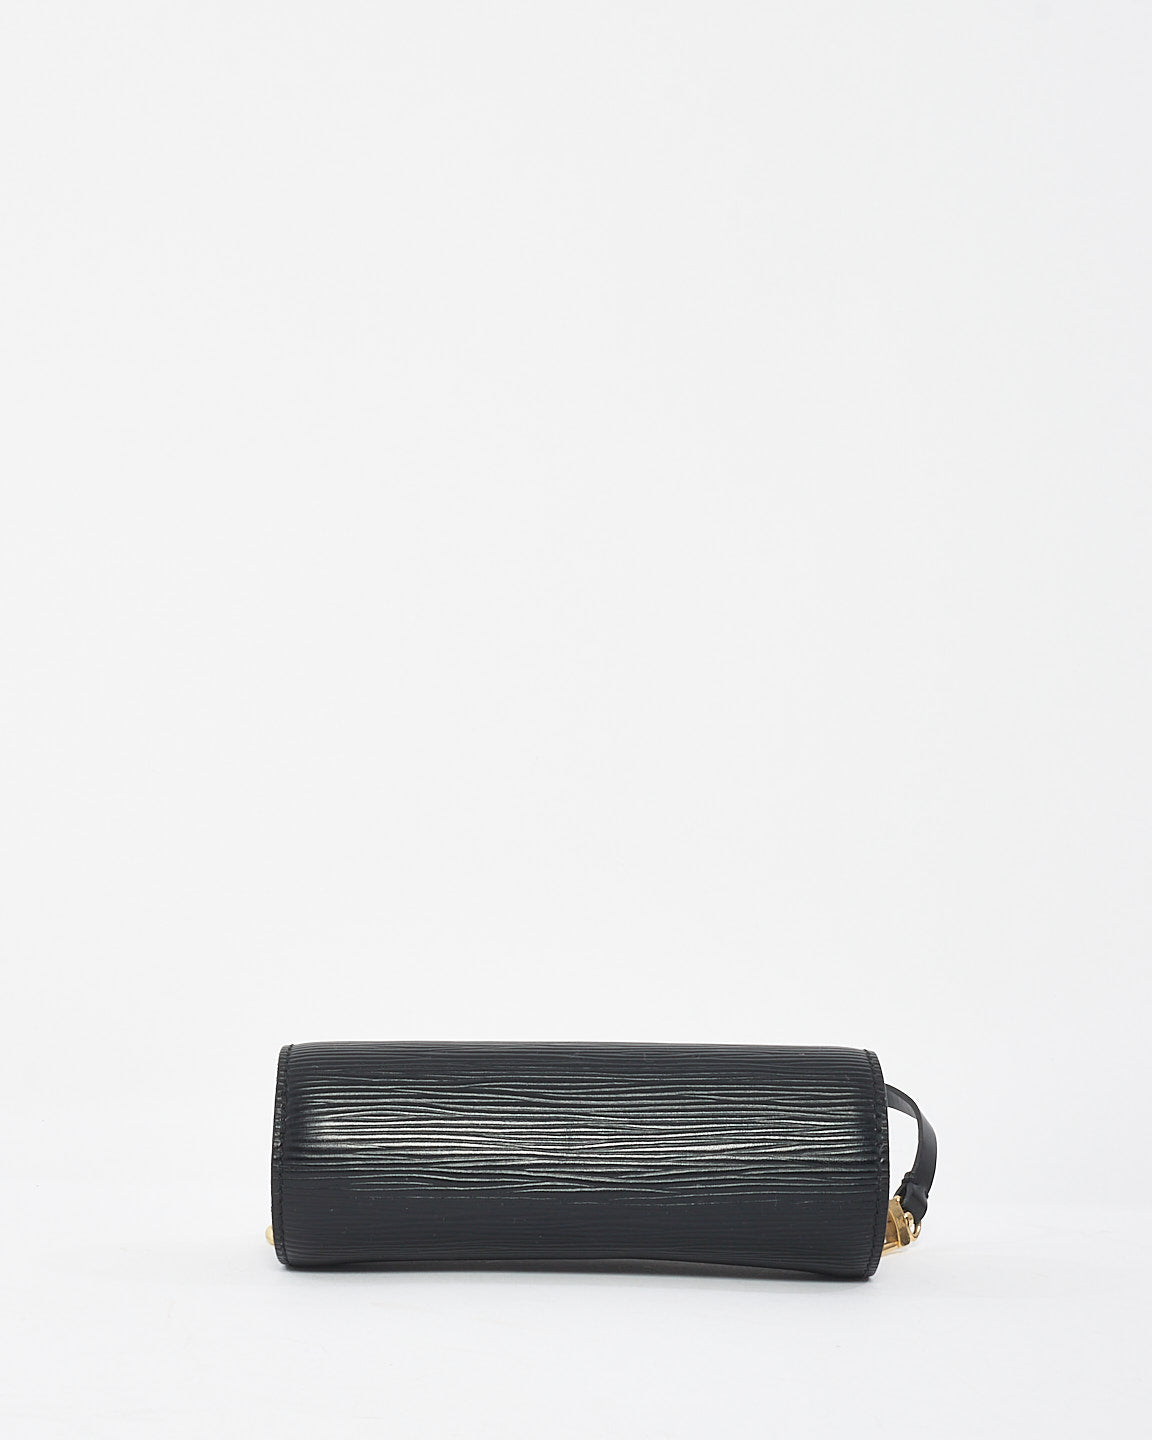 Louis Vuitton Black Epi Leather Mini Papillion Bag